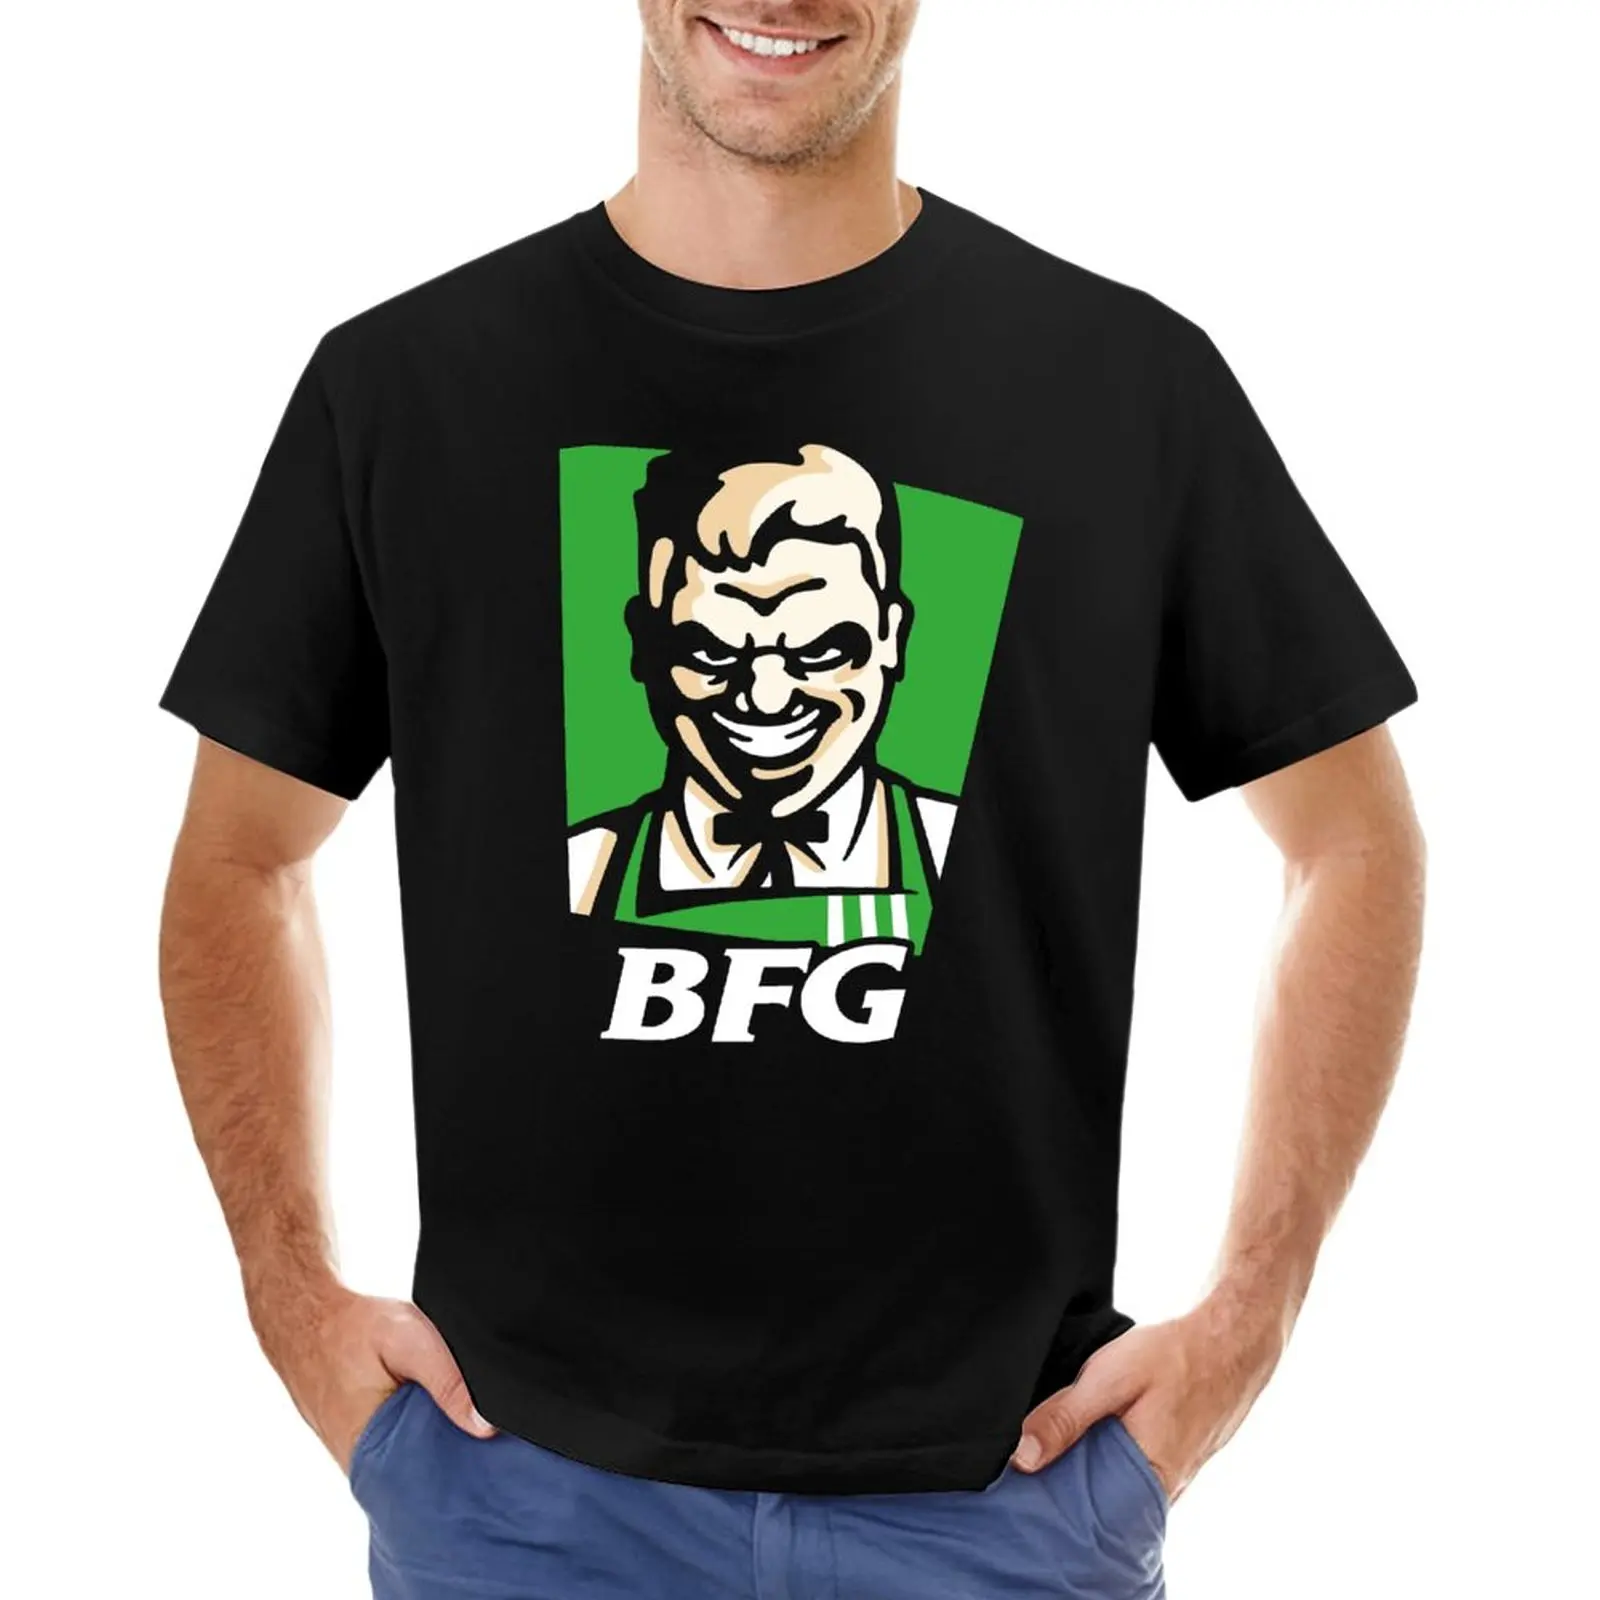 

New humor tee shirt black Men Cotton brand Tshirt BFG T-Shirt vintage style blank t shirts men clothing cool Short sleeve